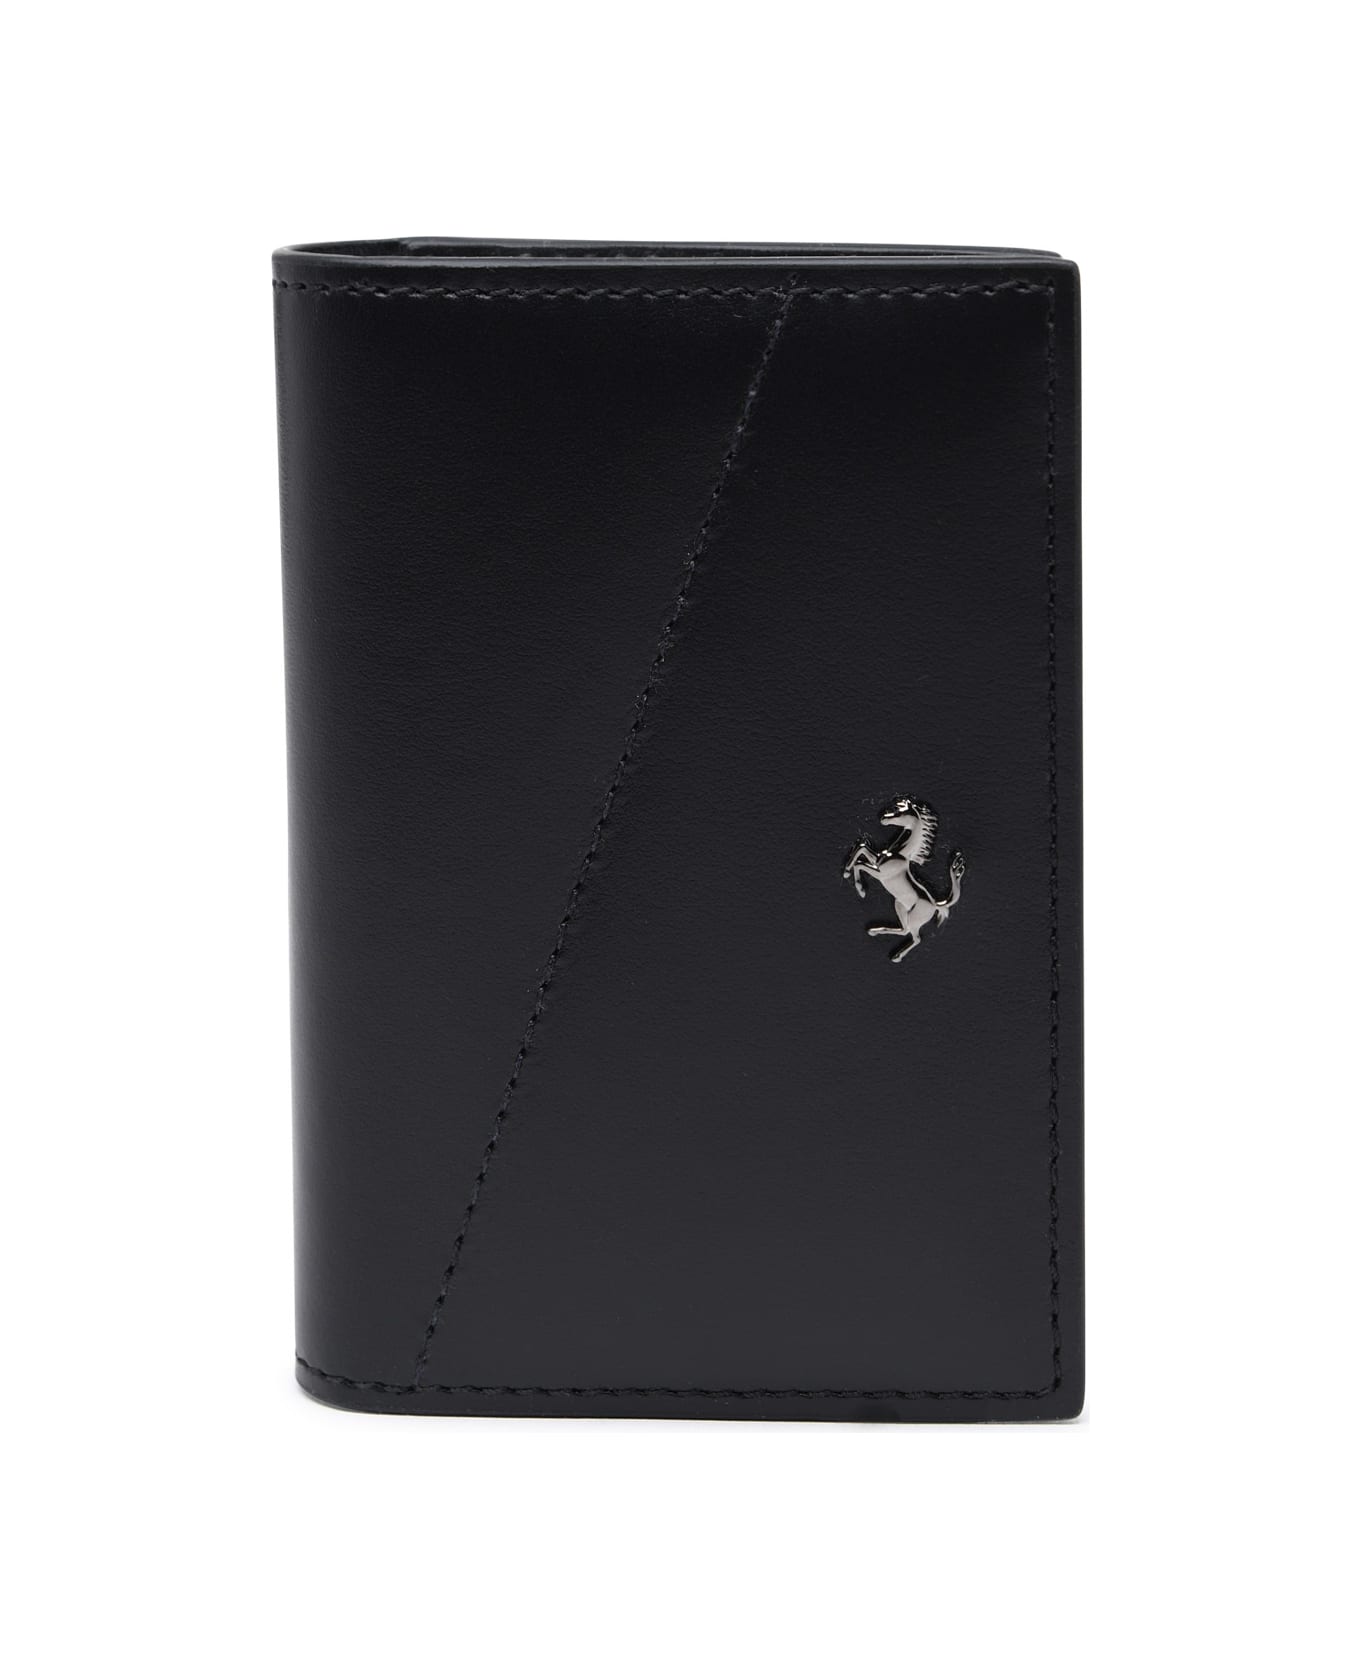 Ferrari Black Leather Wallet - Black 財布